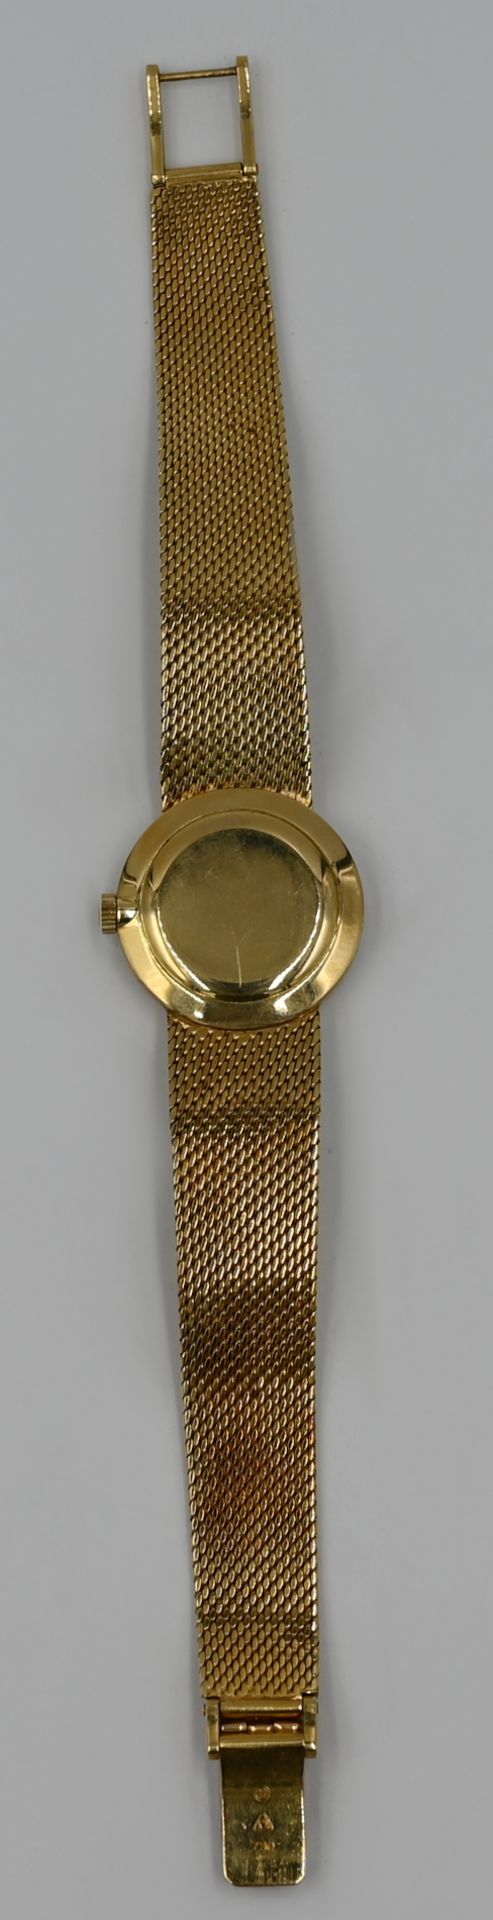 1 Damenarmbanduhr OMEGA, GG 18ct., in Originalschatulle, fleckiges Ziffernblatt, Handaufzug, Uhr läu - Image 3 of 3